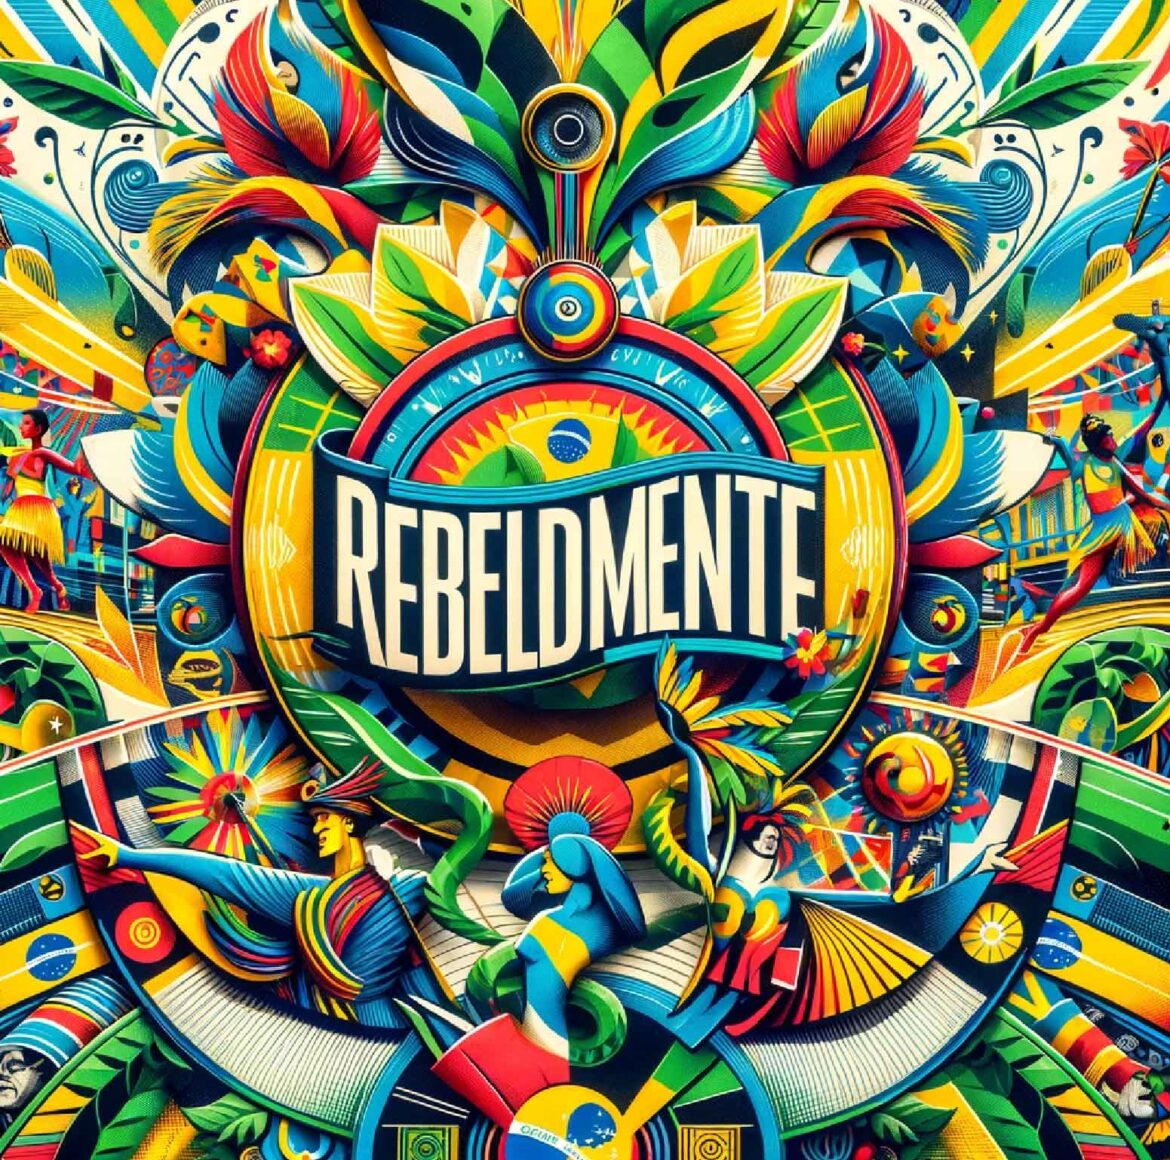 Rebeldemente A Revolutionary Anthem by MC Leleto